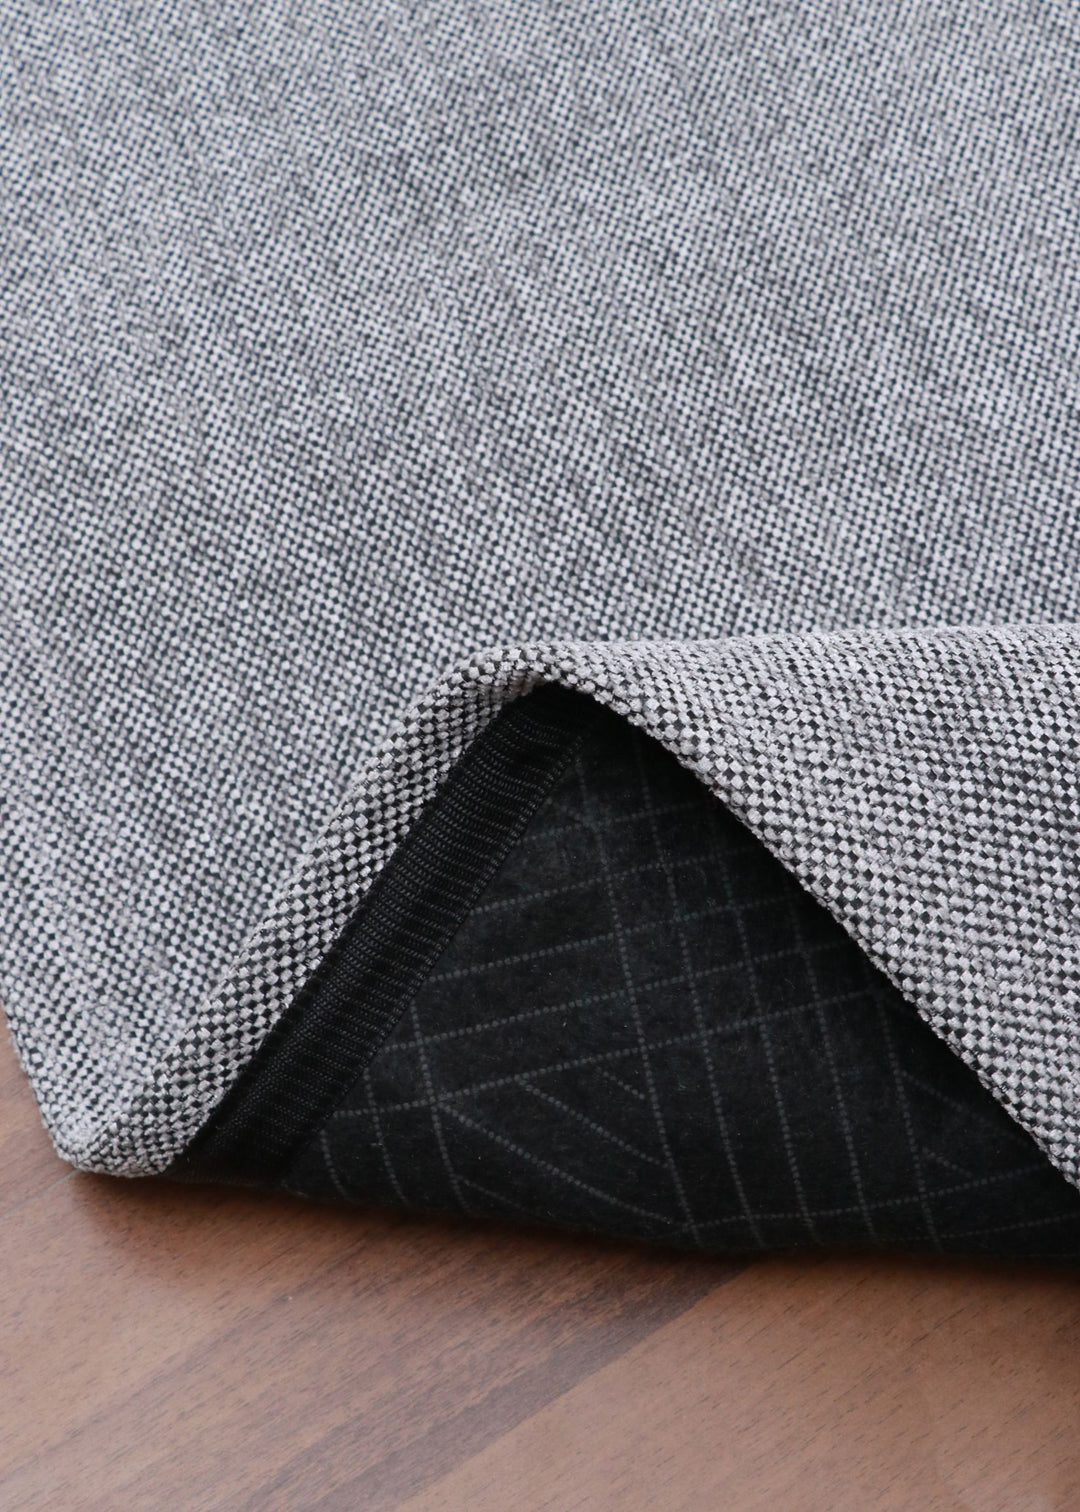 Gray & Black Woven Fabric Rug - Indoor Use